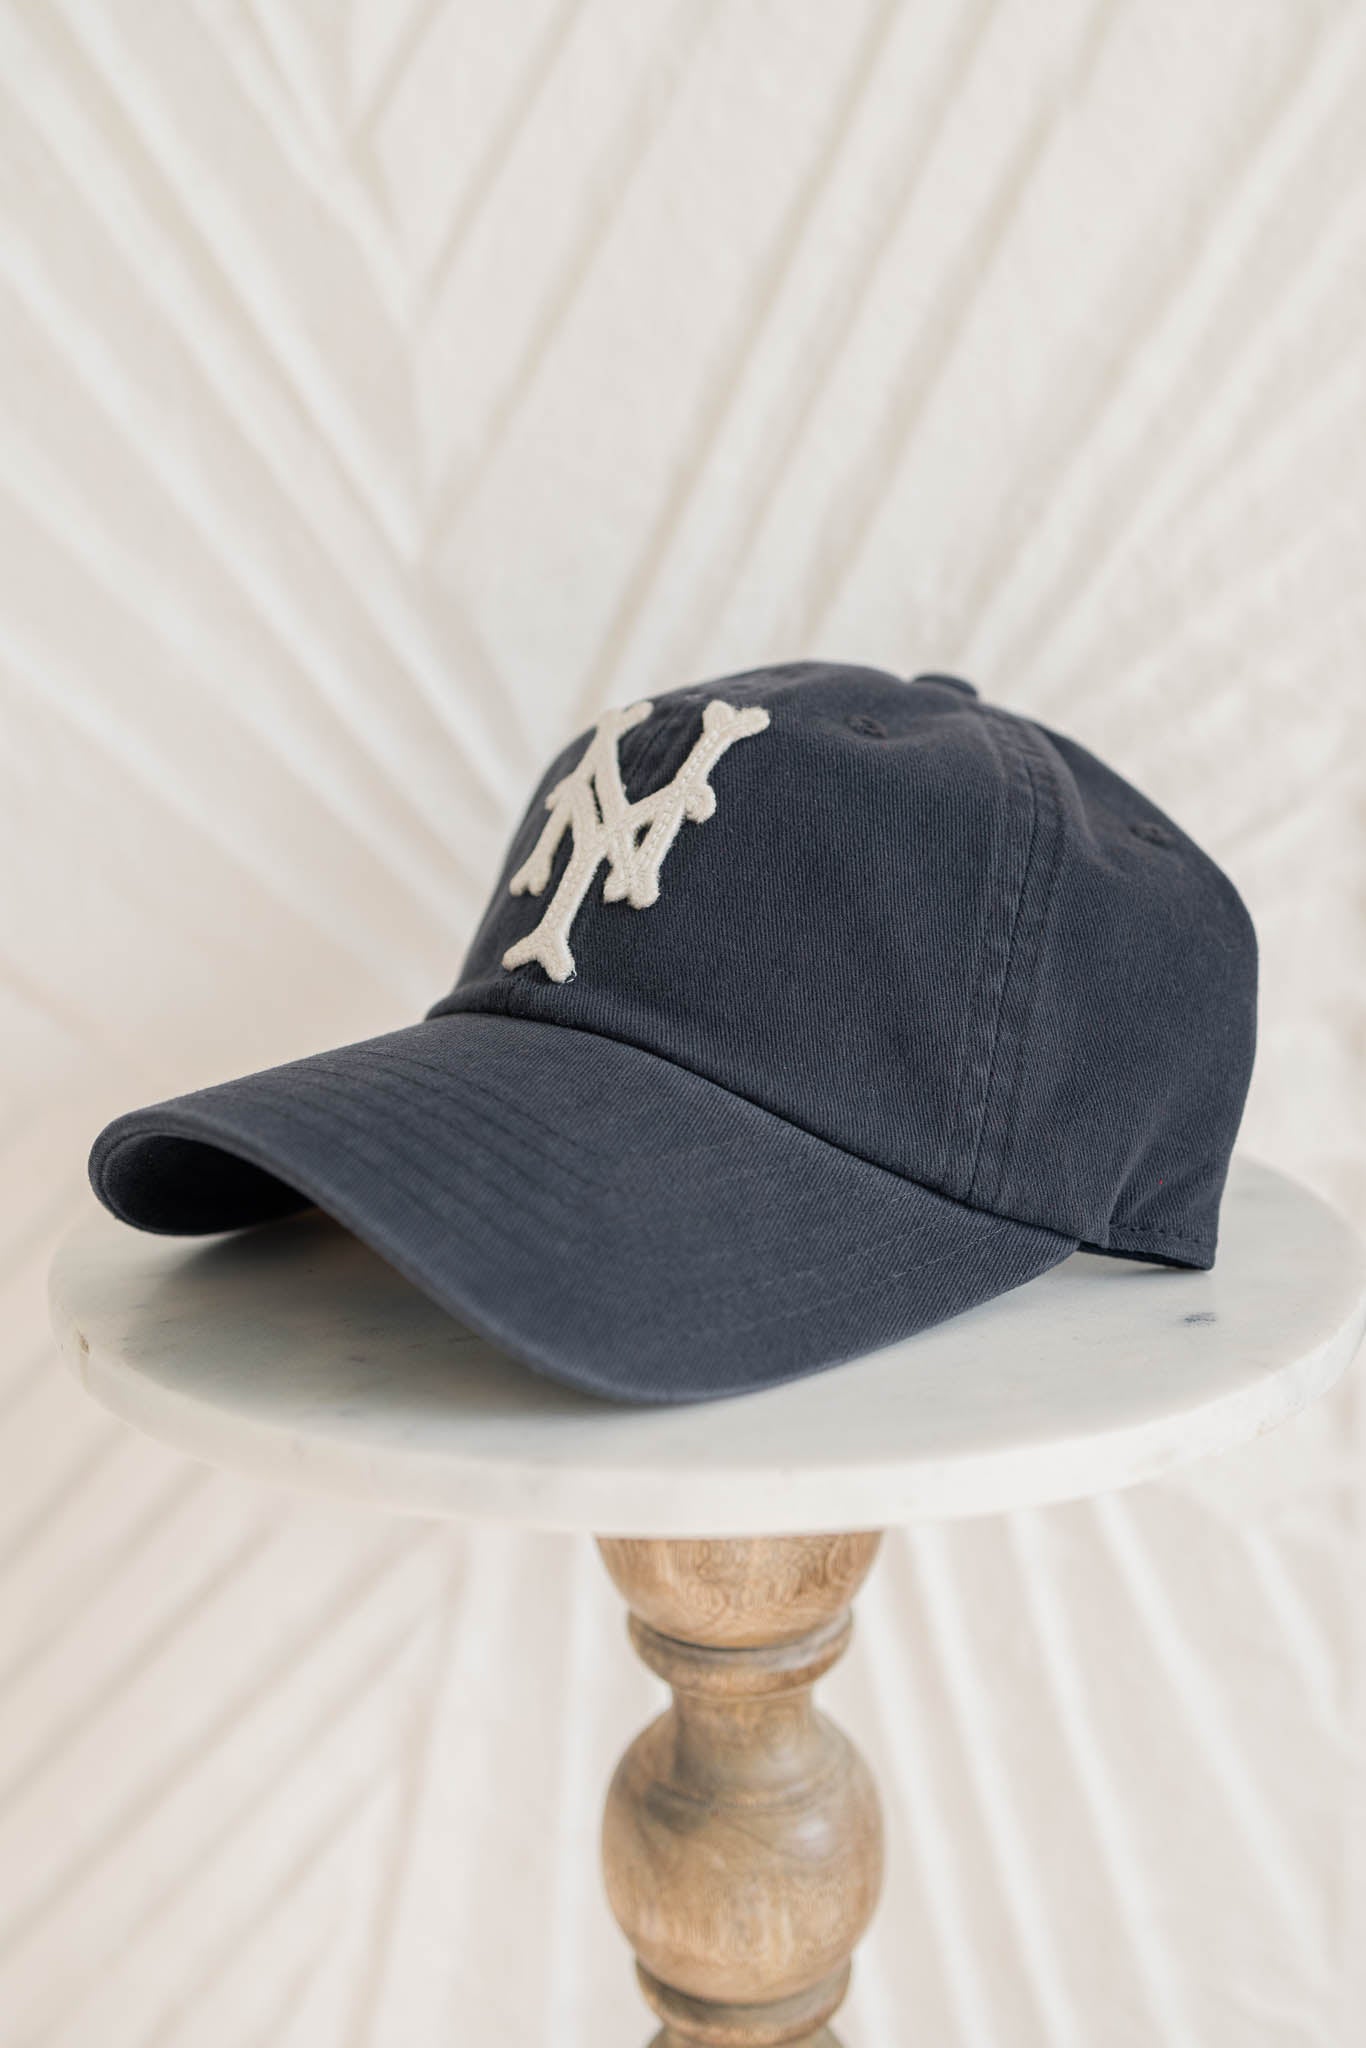 NY Yankees Vintage Baseball Cap